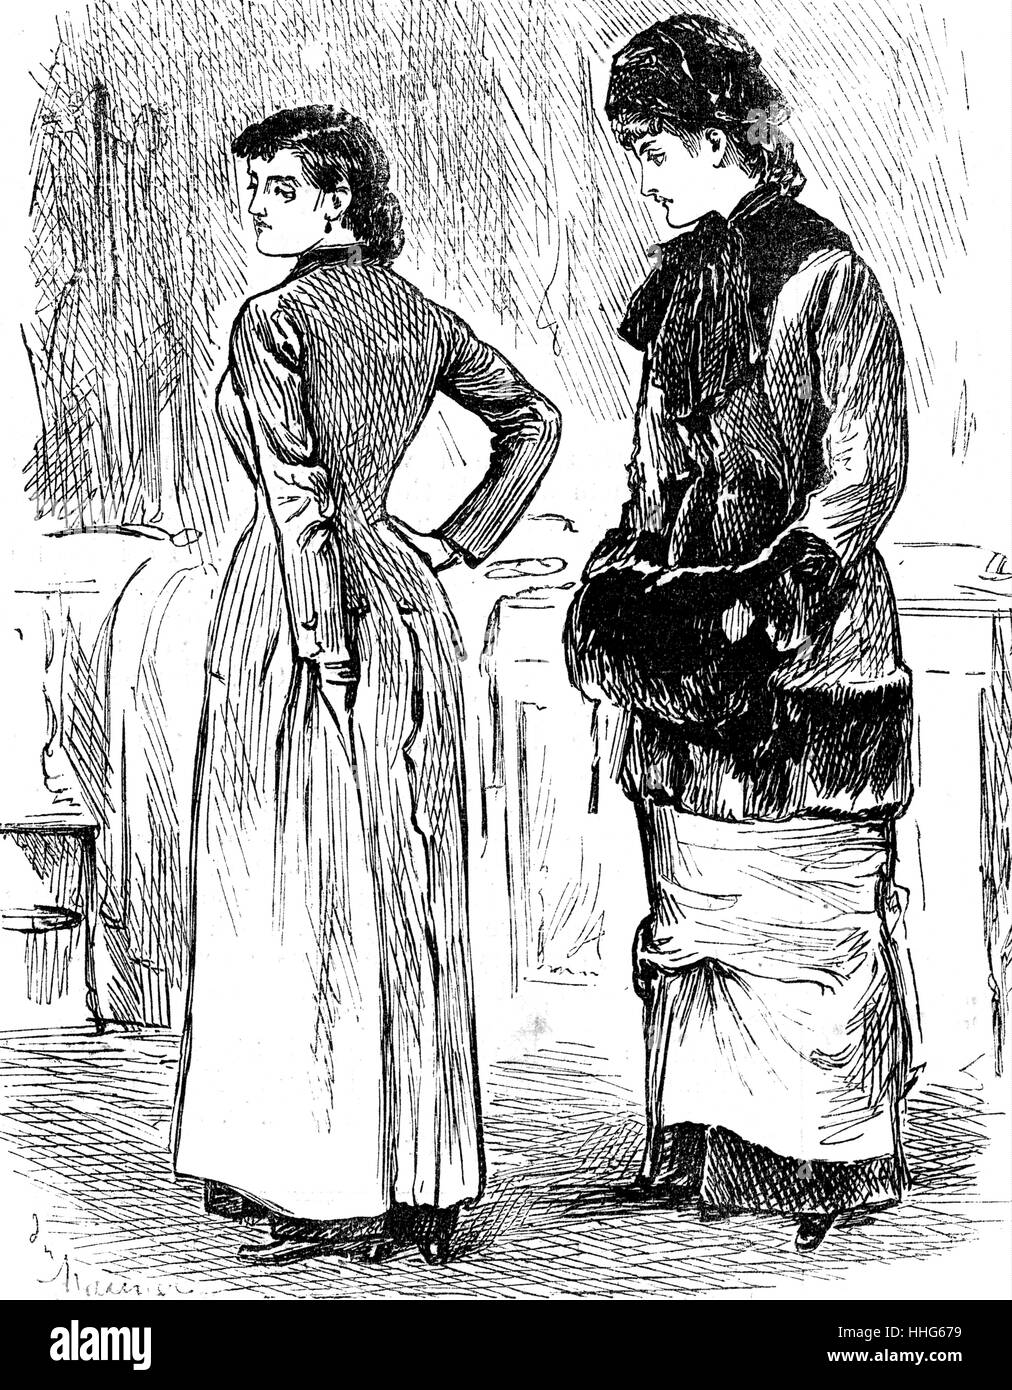 Moda para mujer en 1880 fotografías e imágenes de alta resolución - Alamy